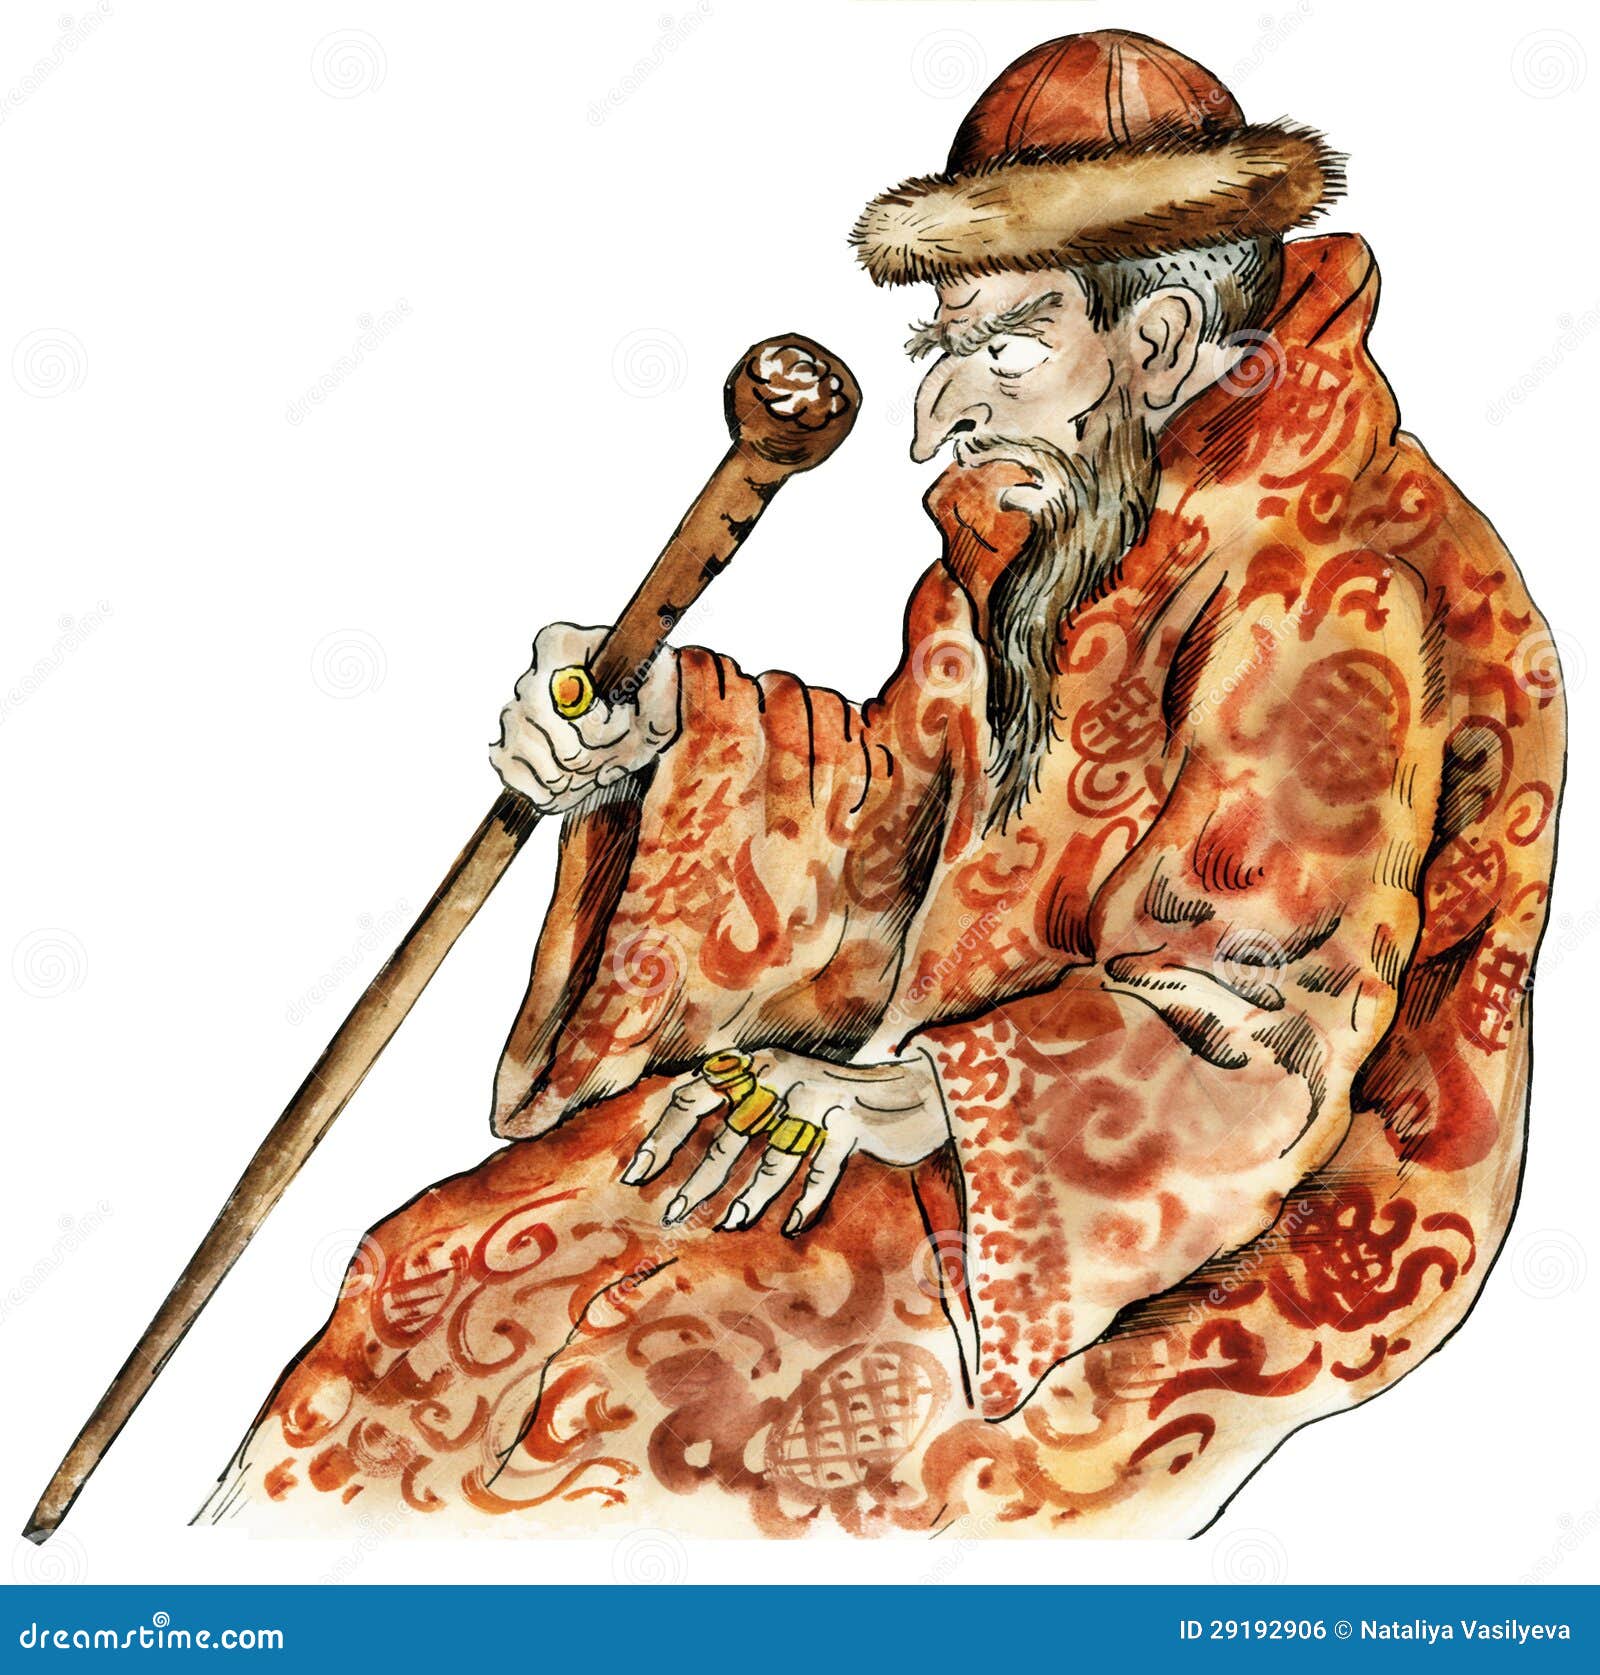 tsar ivan caricature portrait